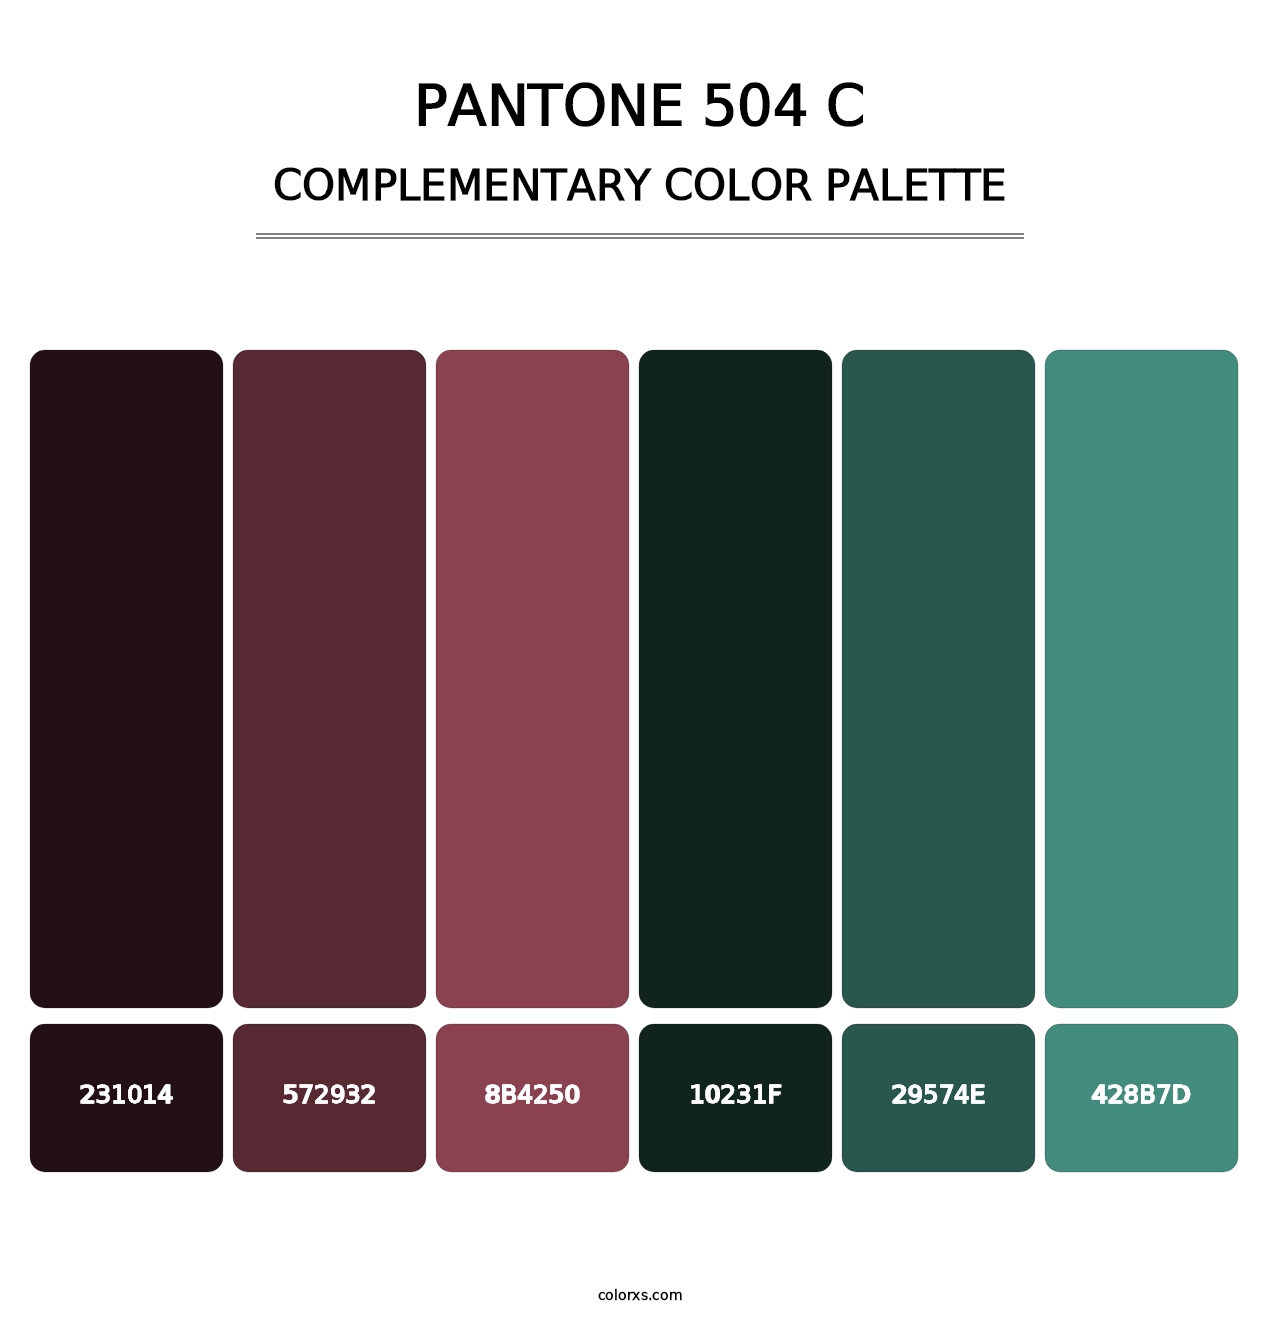 PANTONE 504 C - Complementary Color Palette